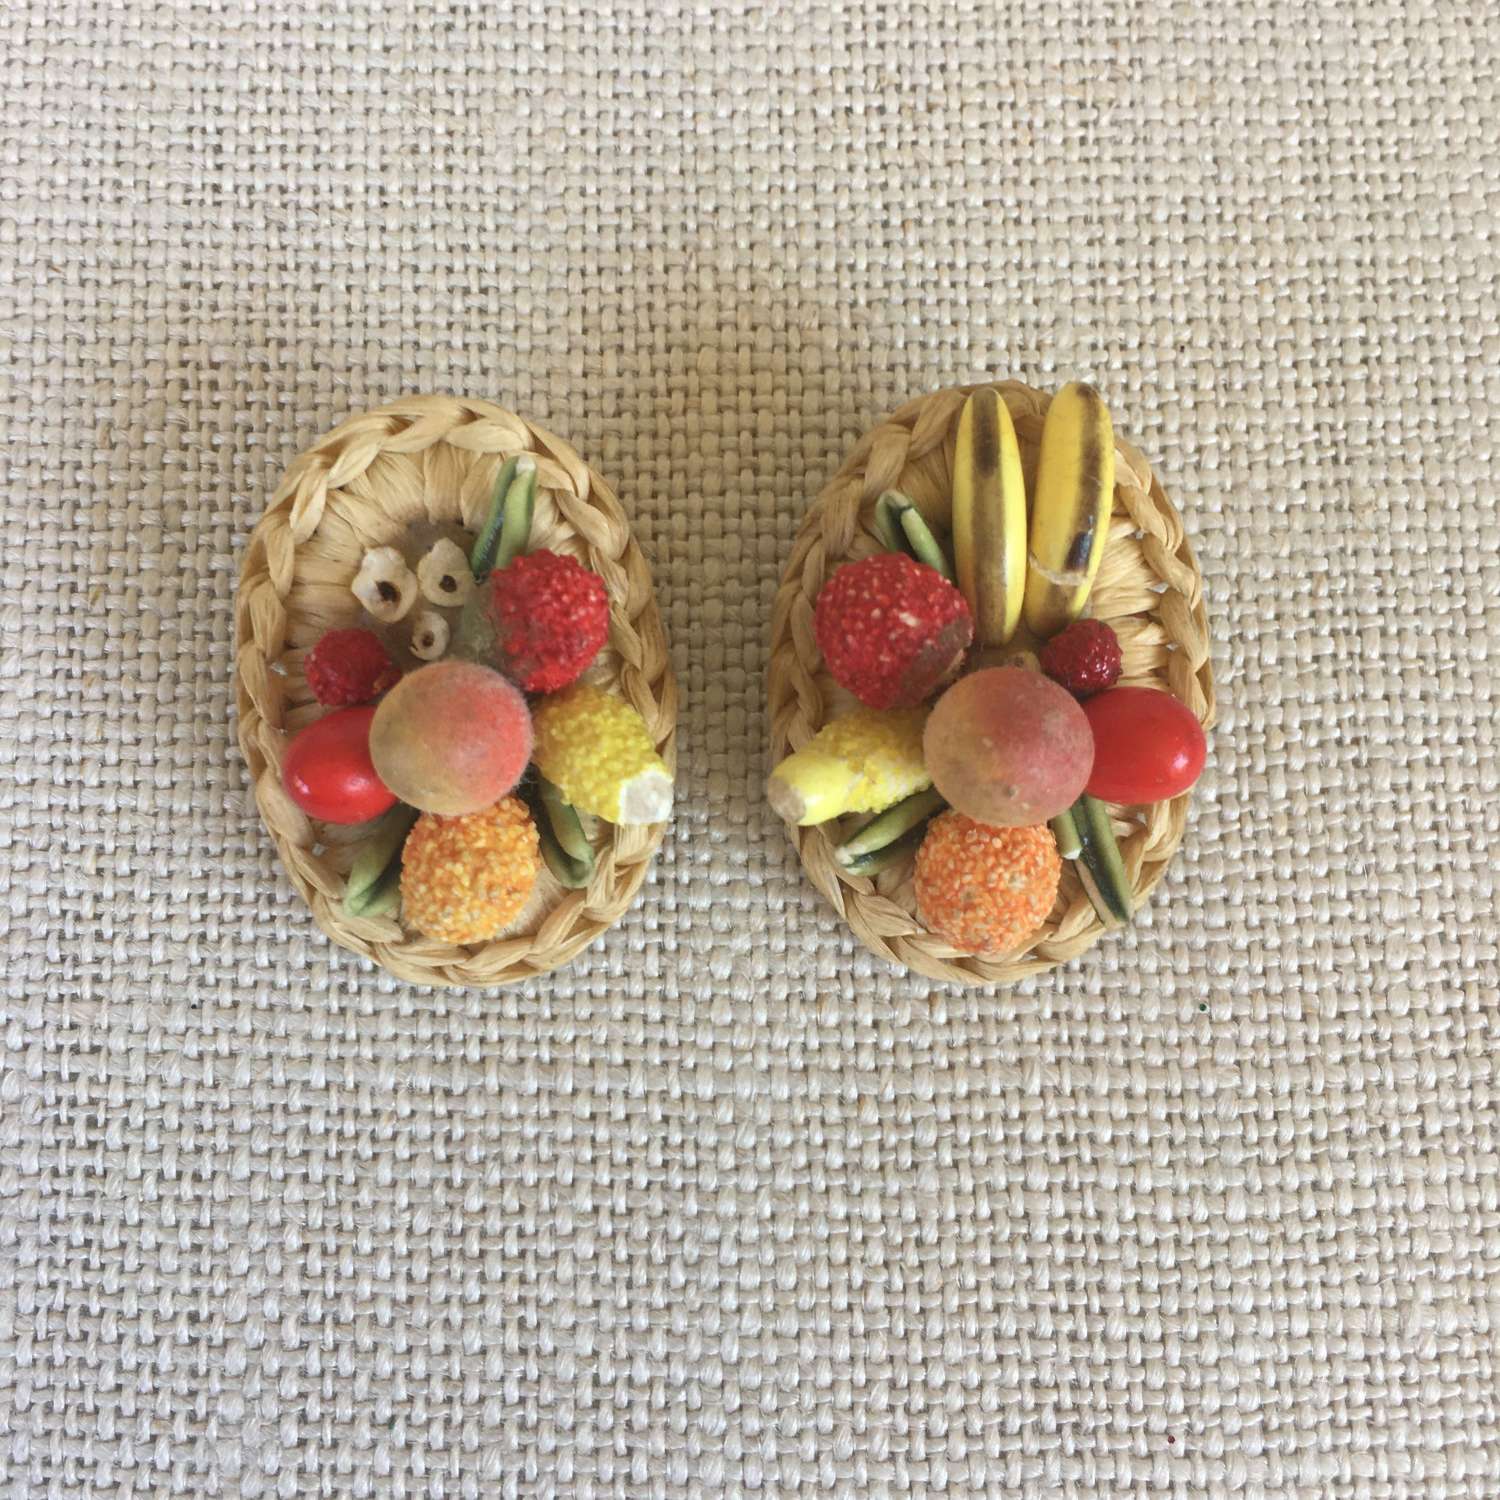 Vintage 1950s fruit basket clip earrings